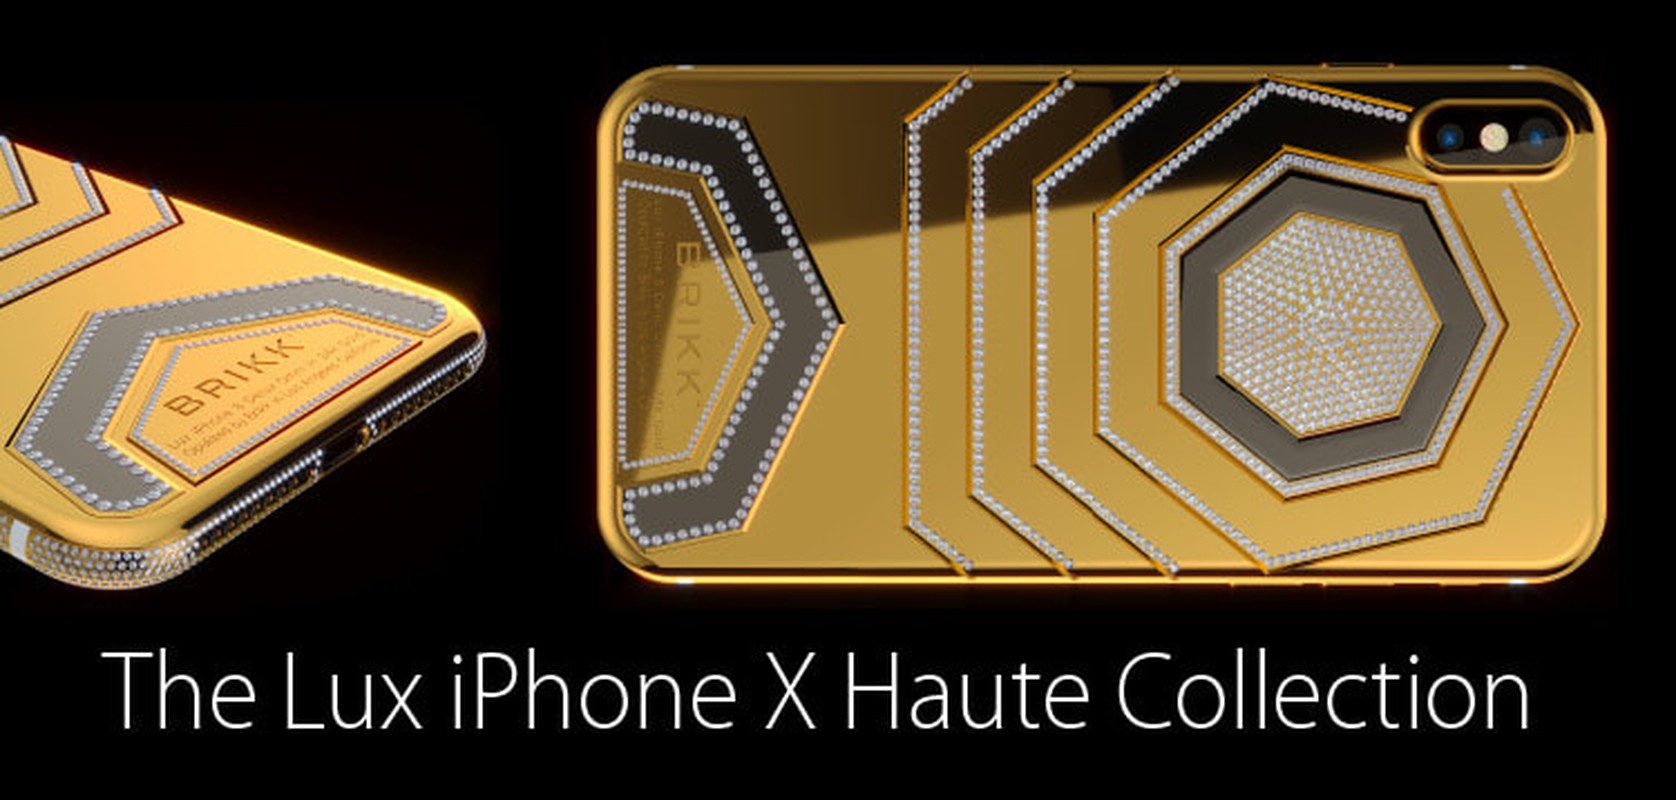 Phat sot voi iPhone X ma vang gia 1,5 ty vua lo dien-Hinh-8